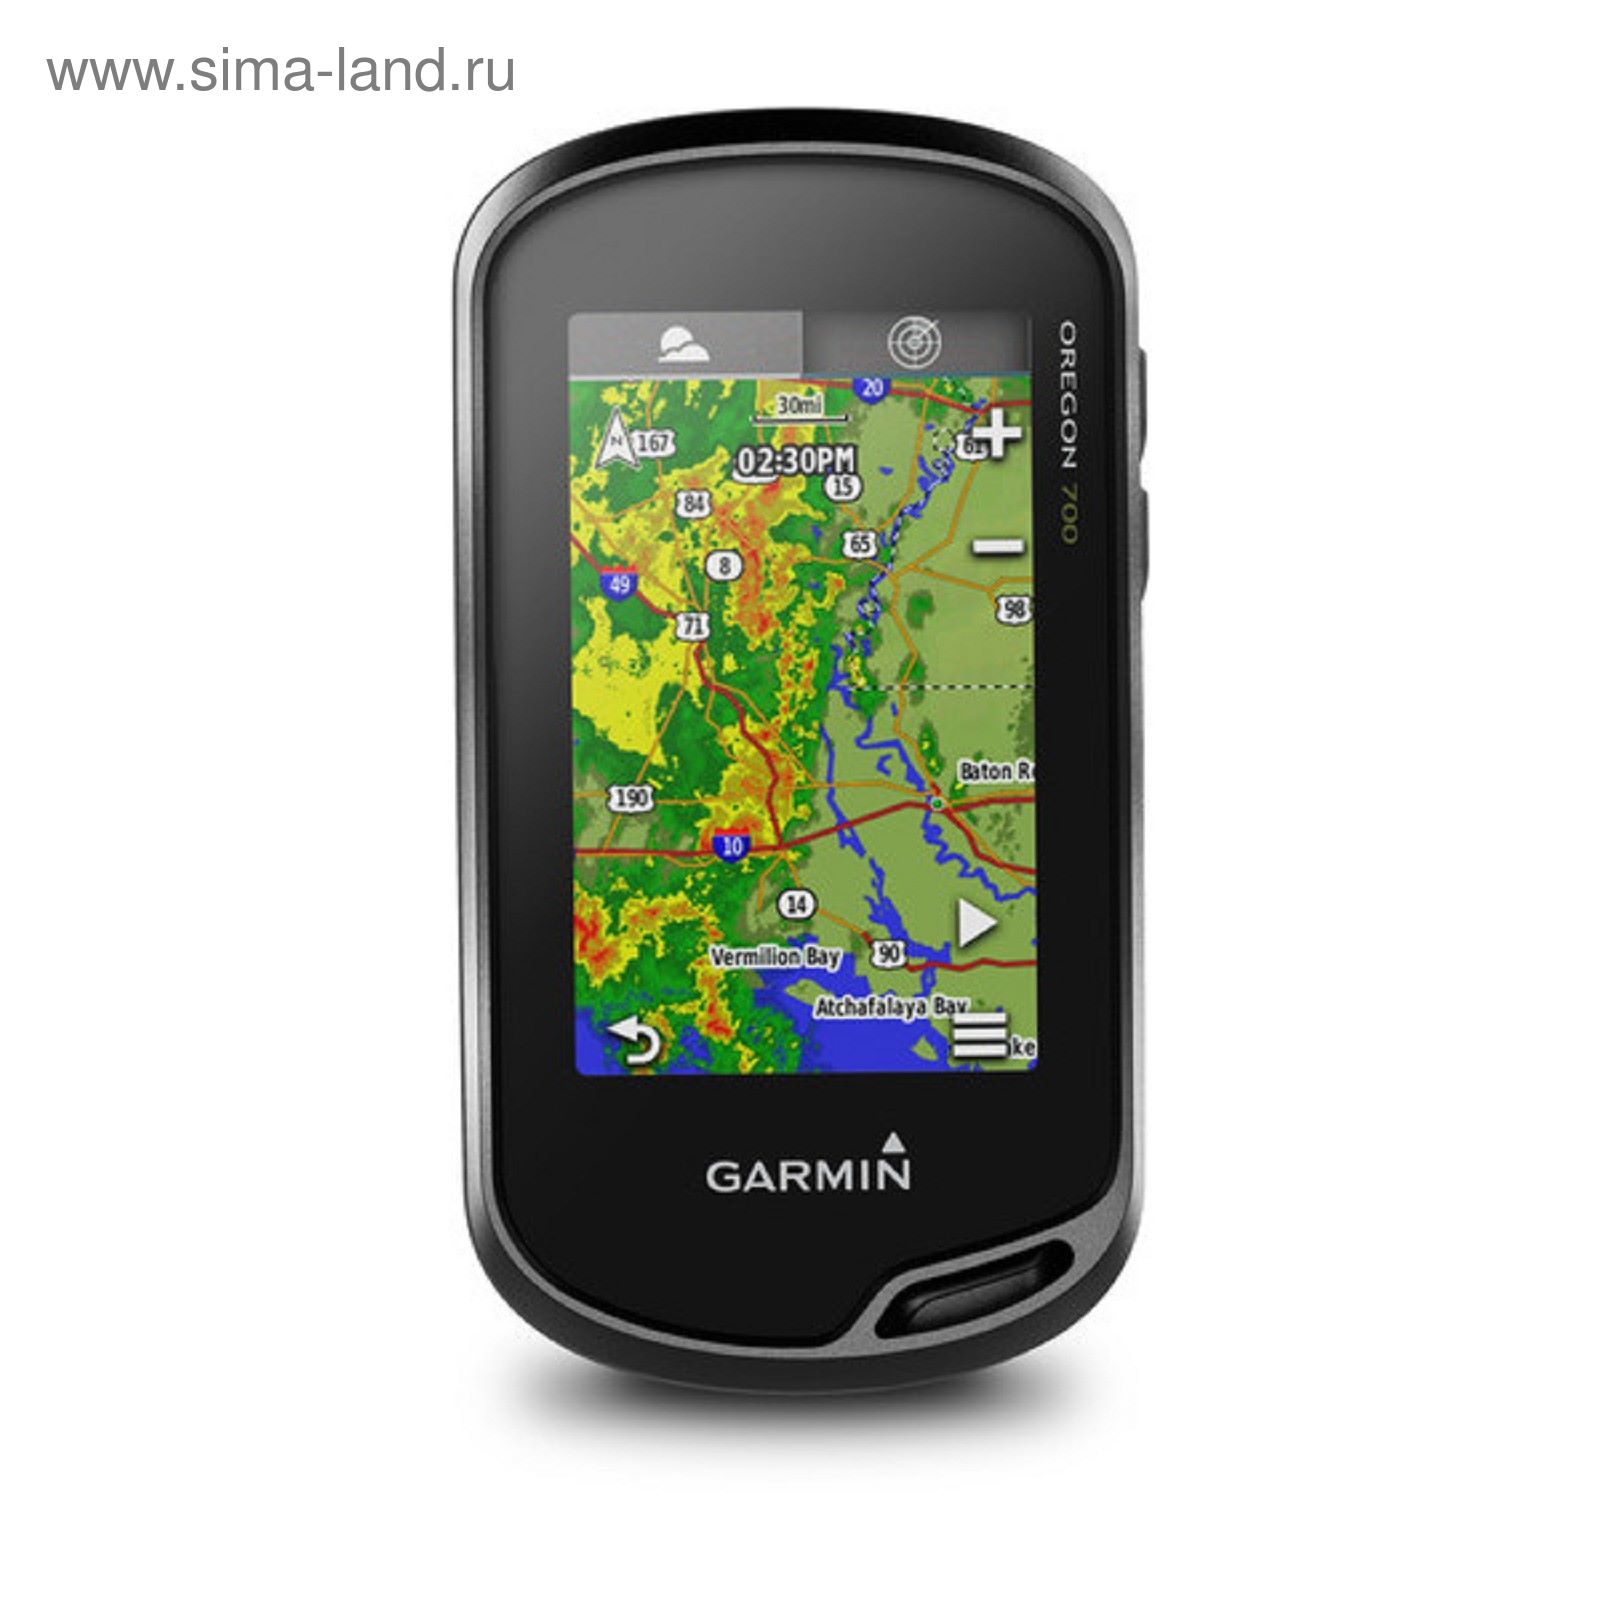 GPS-навигатор Garmin Oregon 700t,GPS Дороги РФ